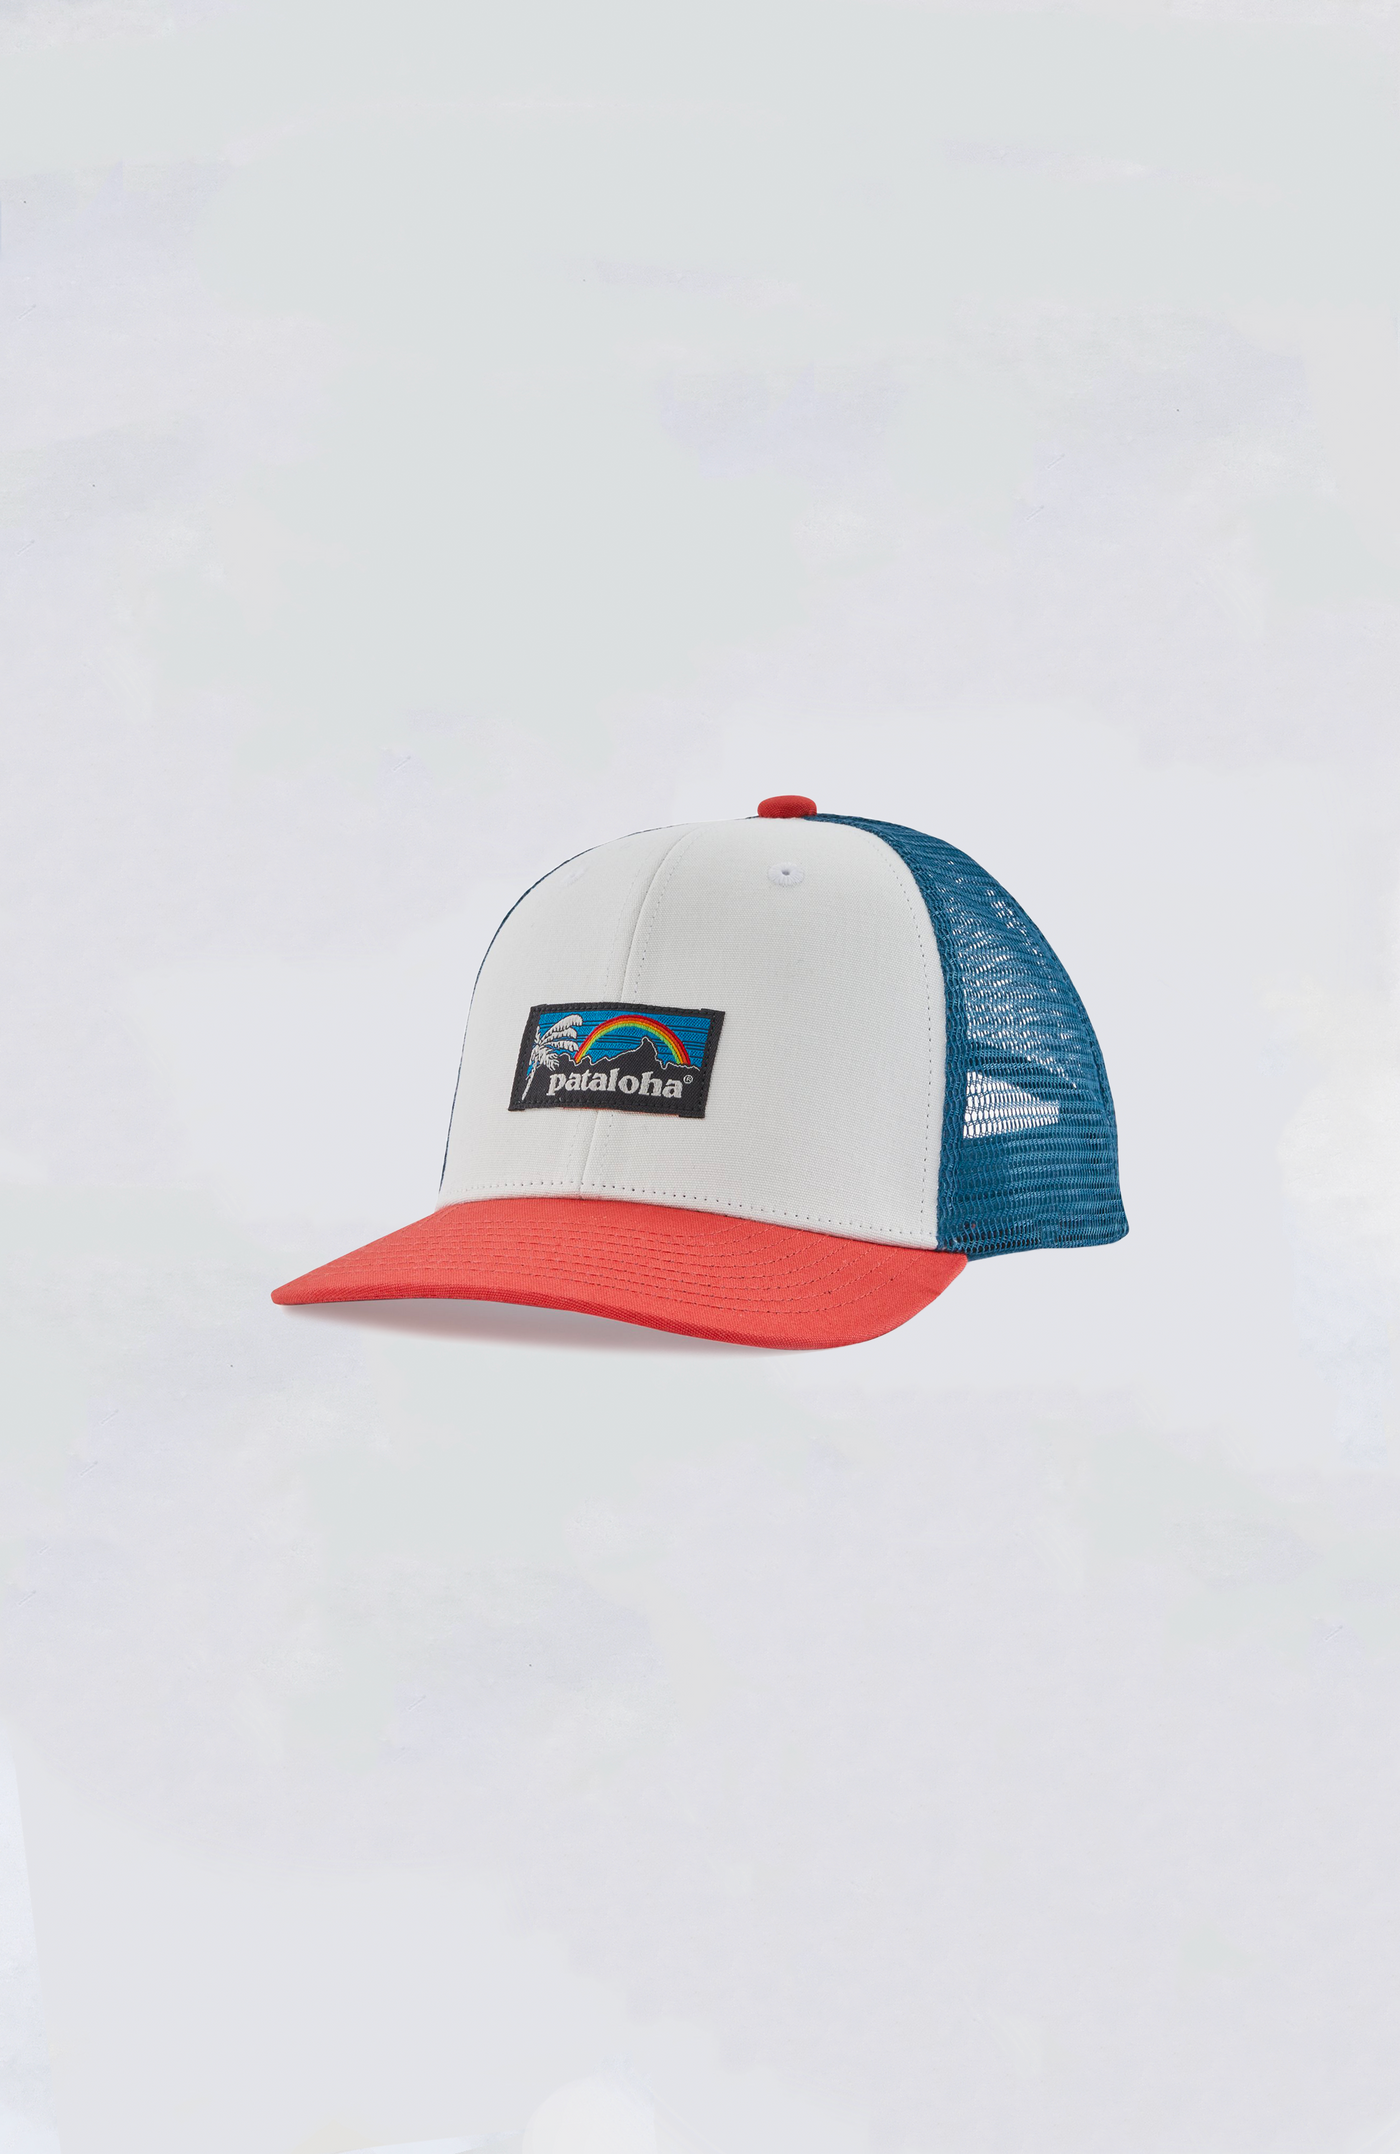 Patagonia - Kids's Trucker Hat